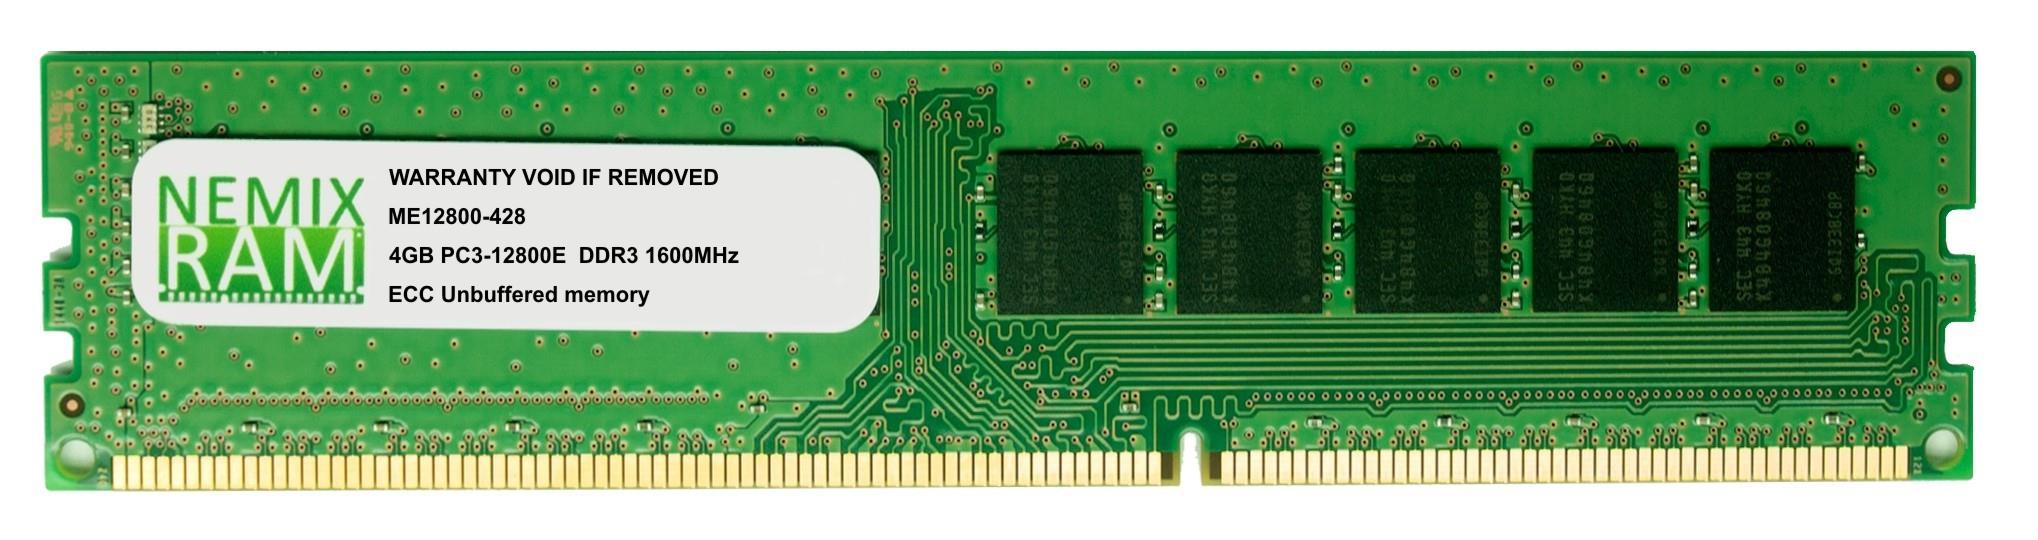 NEMIX RAM 4GB PC3 12800 Unbuffered Memory for Dell Precision T3610 Workstation